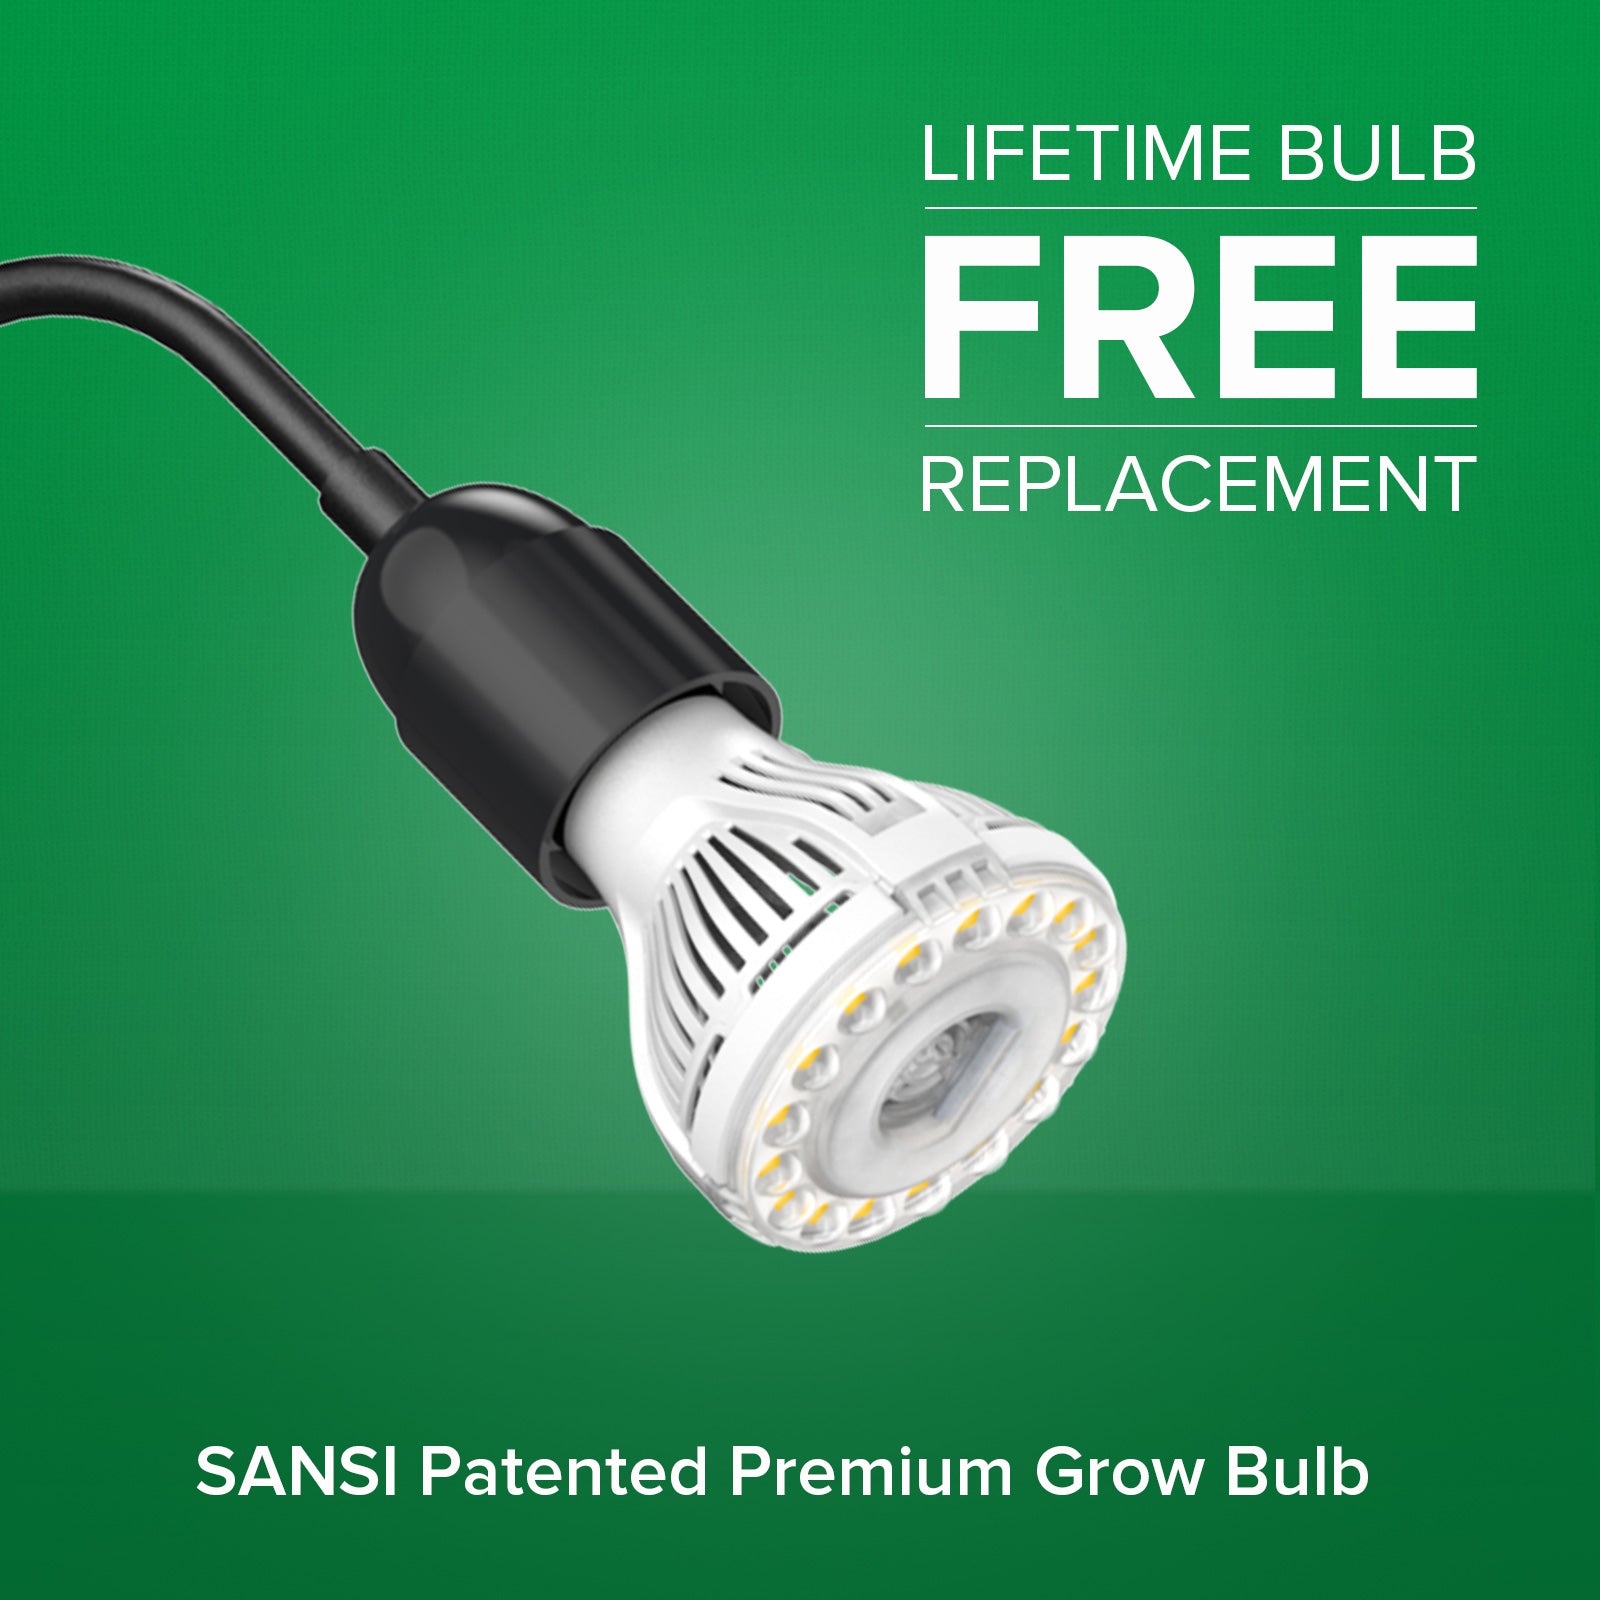 SANSI provides lifetime Free bulb replacement.